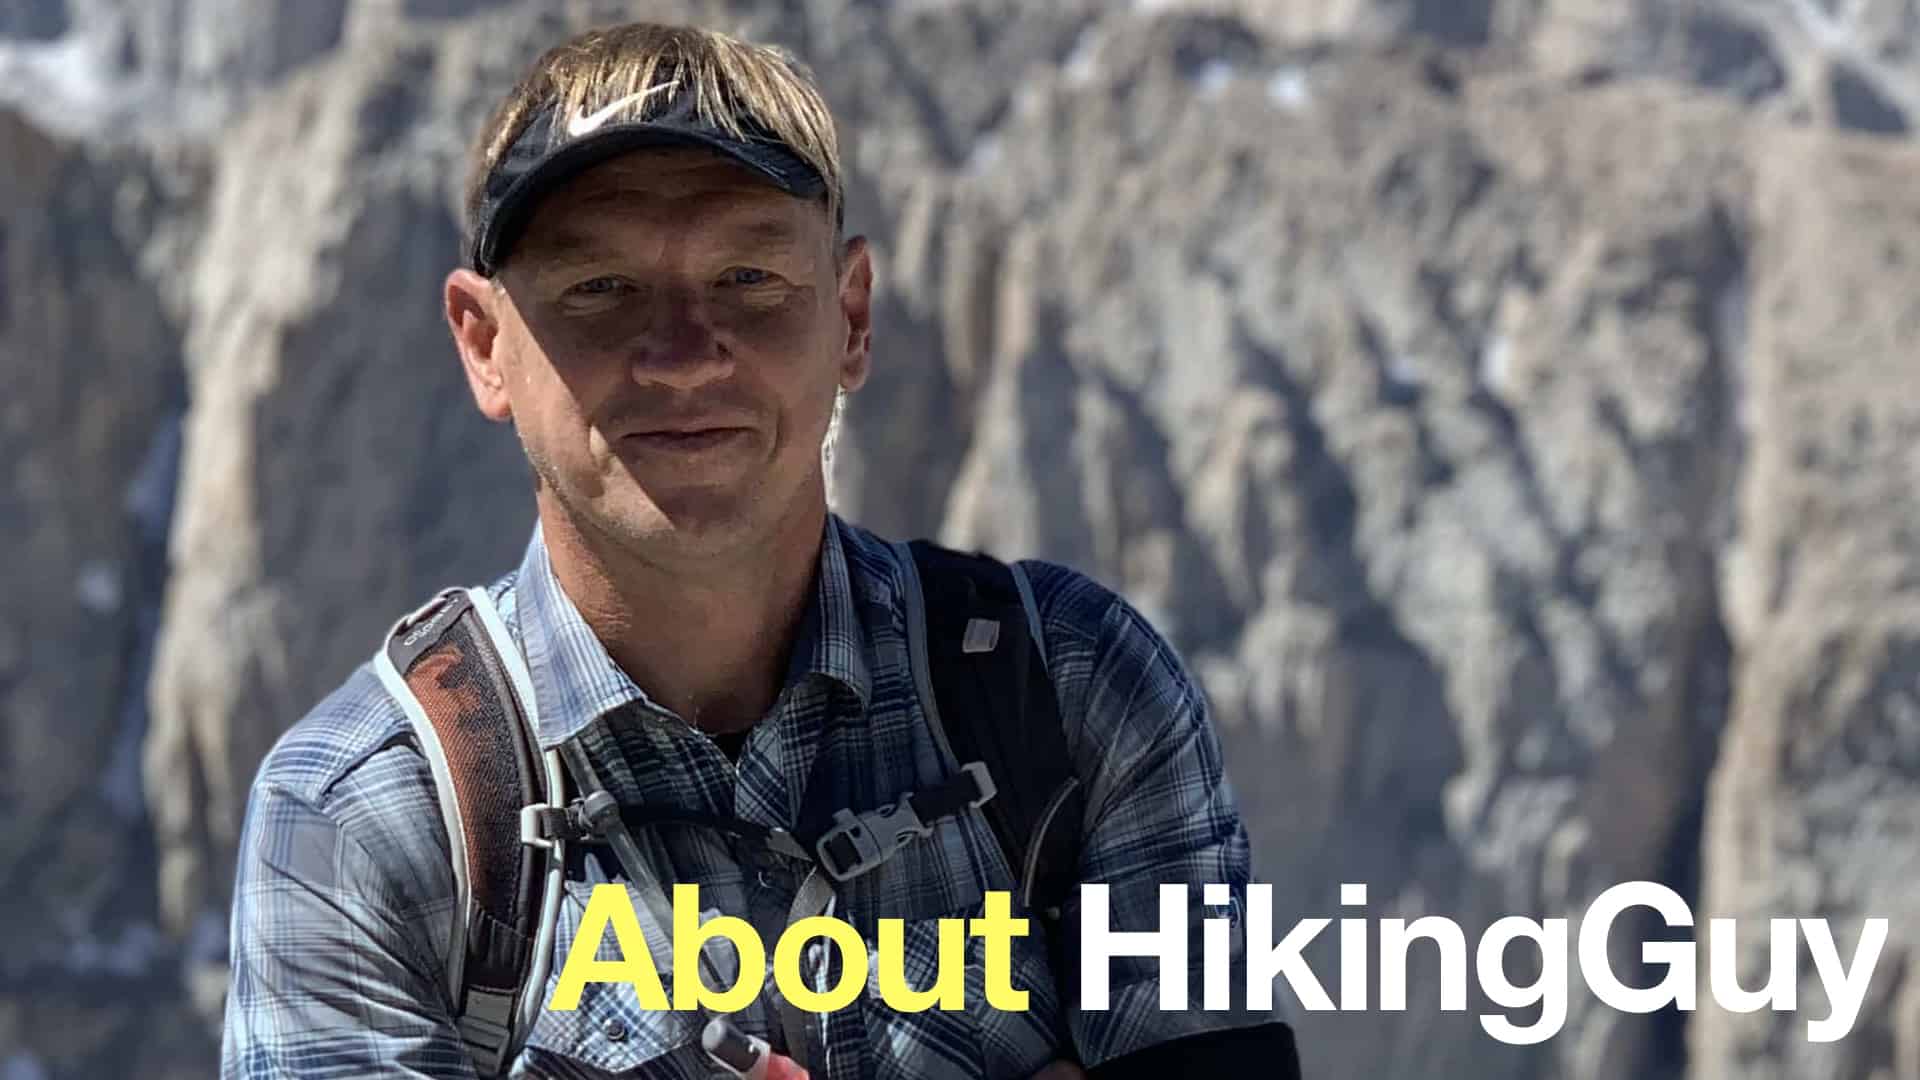 About Hiking Guy (aka Cris Hazzard) 